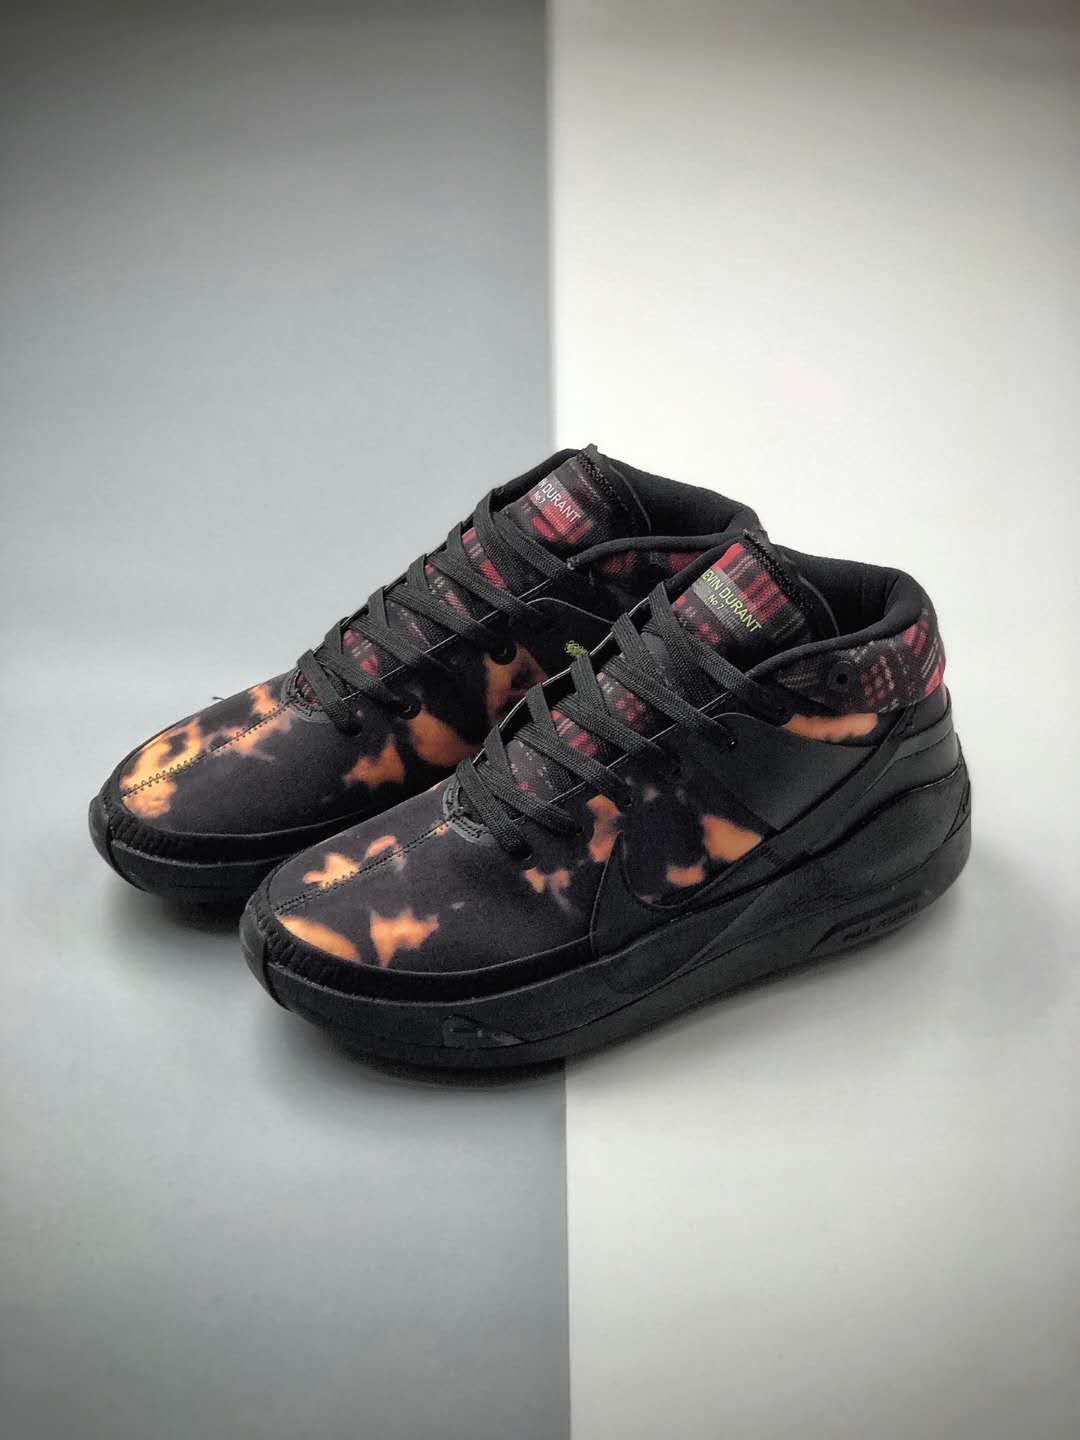 Nike KD 13 Black Grid Grille Noire Mens Shoes - Shop Now at [Website Name]